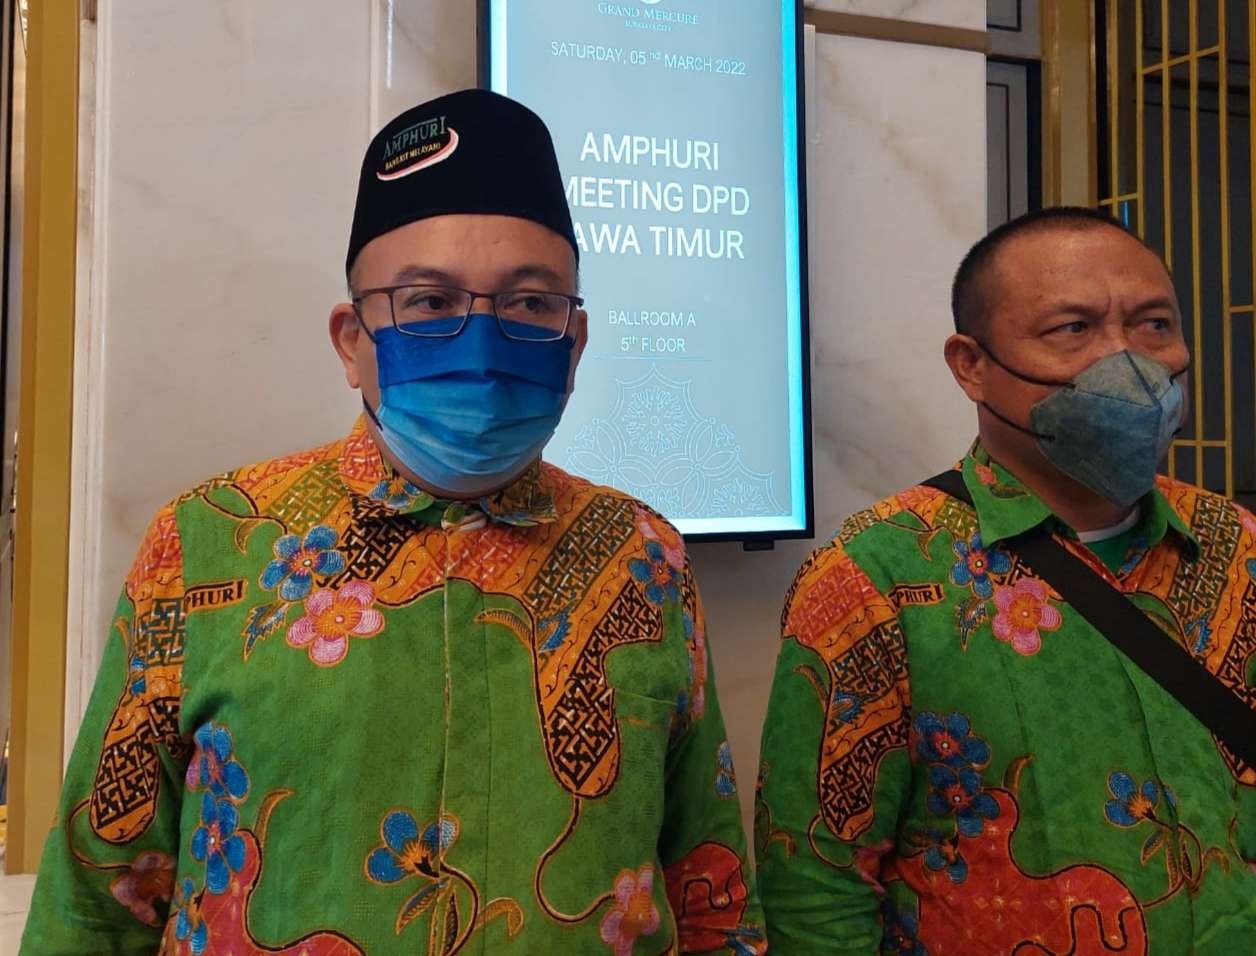 Ketua Amphuri DPD Jatim HM Sufyan Arif (kiri) saat ditemui wartawan dalam sebuah acara. (Foto: Istimewa)